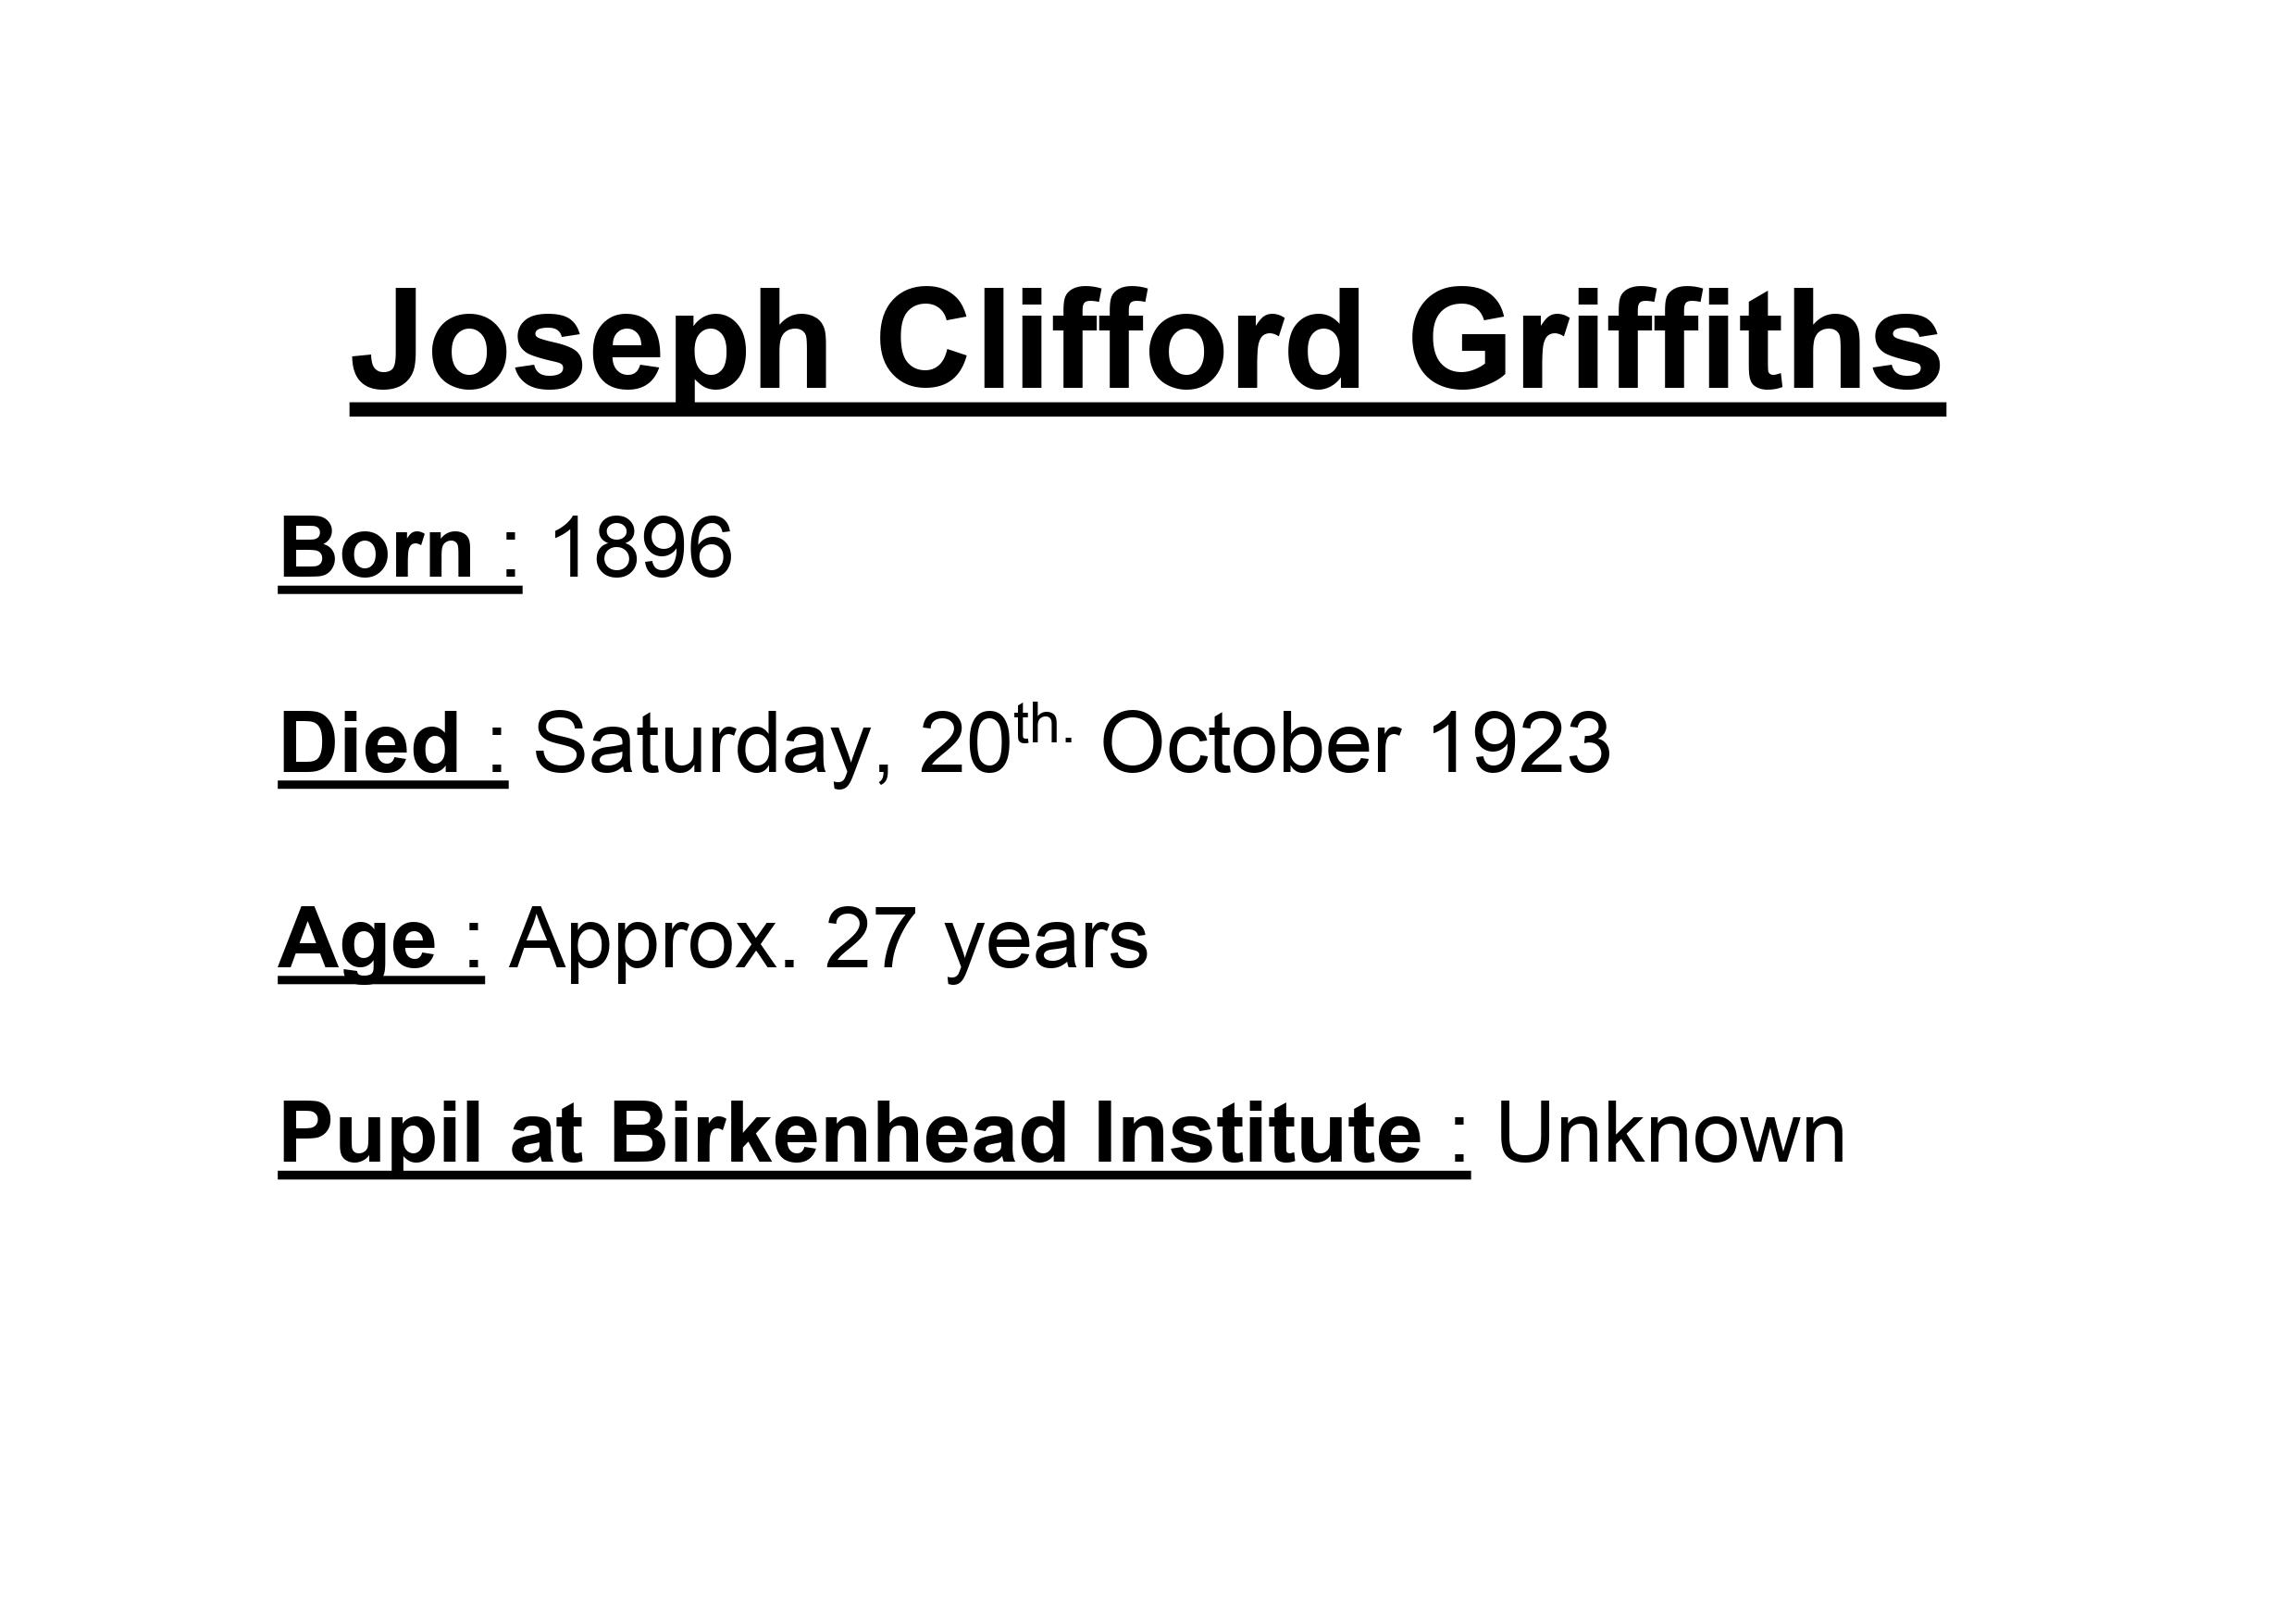 Joseph Clifford Griffiths